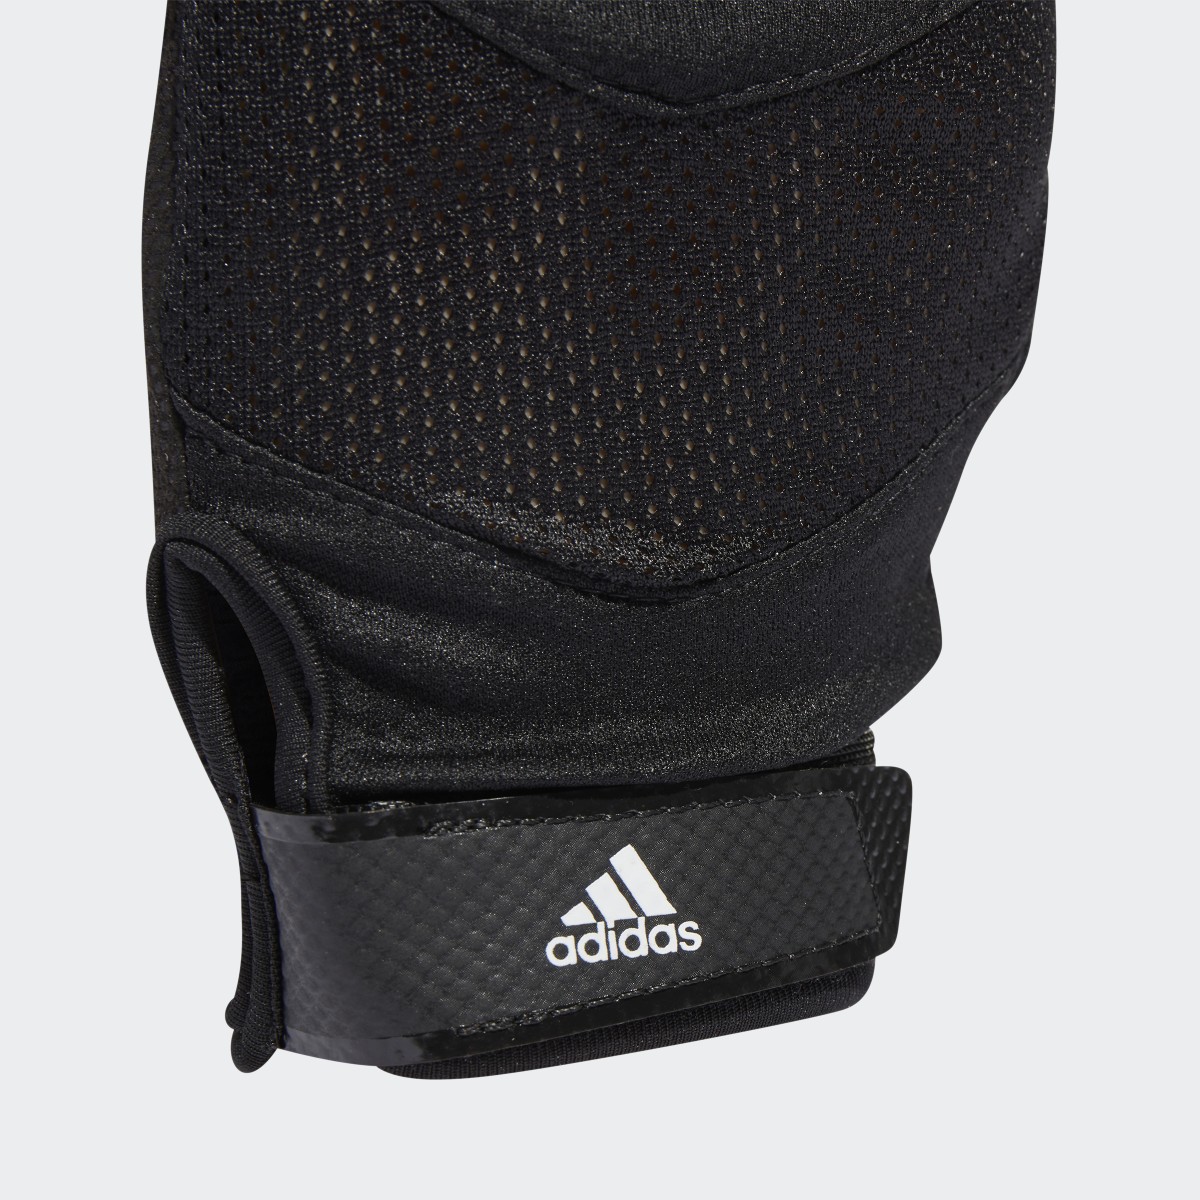 Adidas Training Gloves. 5